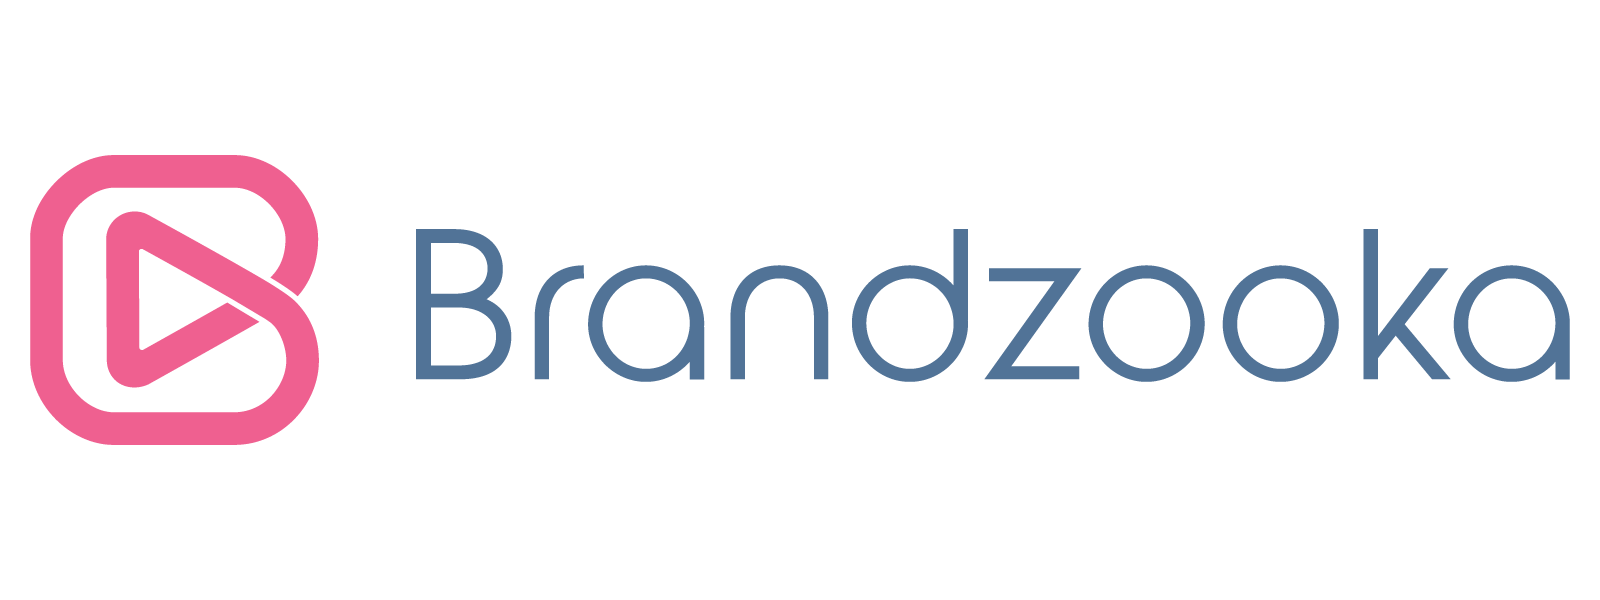 brandzooka_logo_for_light_brackground.png